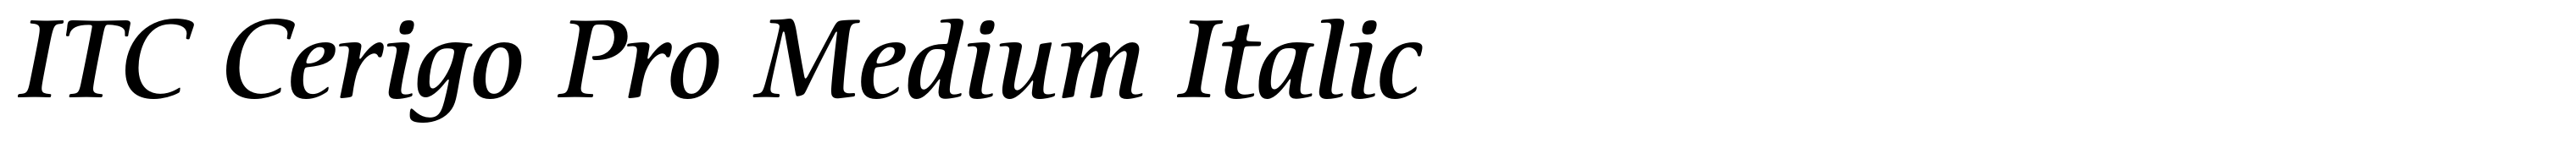 ITC Cerigo Pro Medium Italic